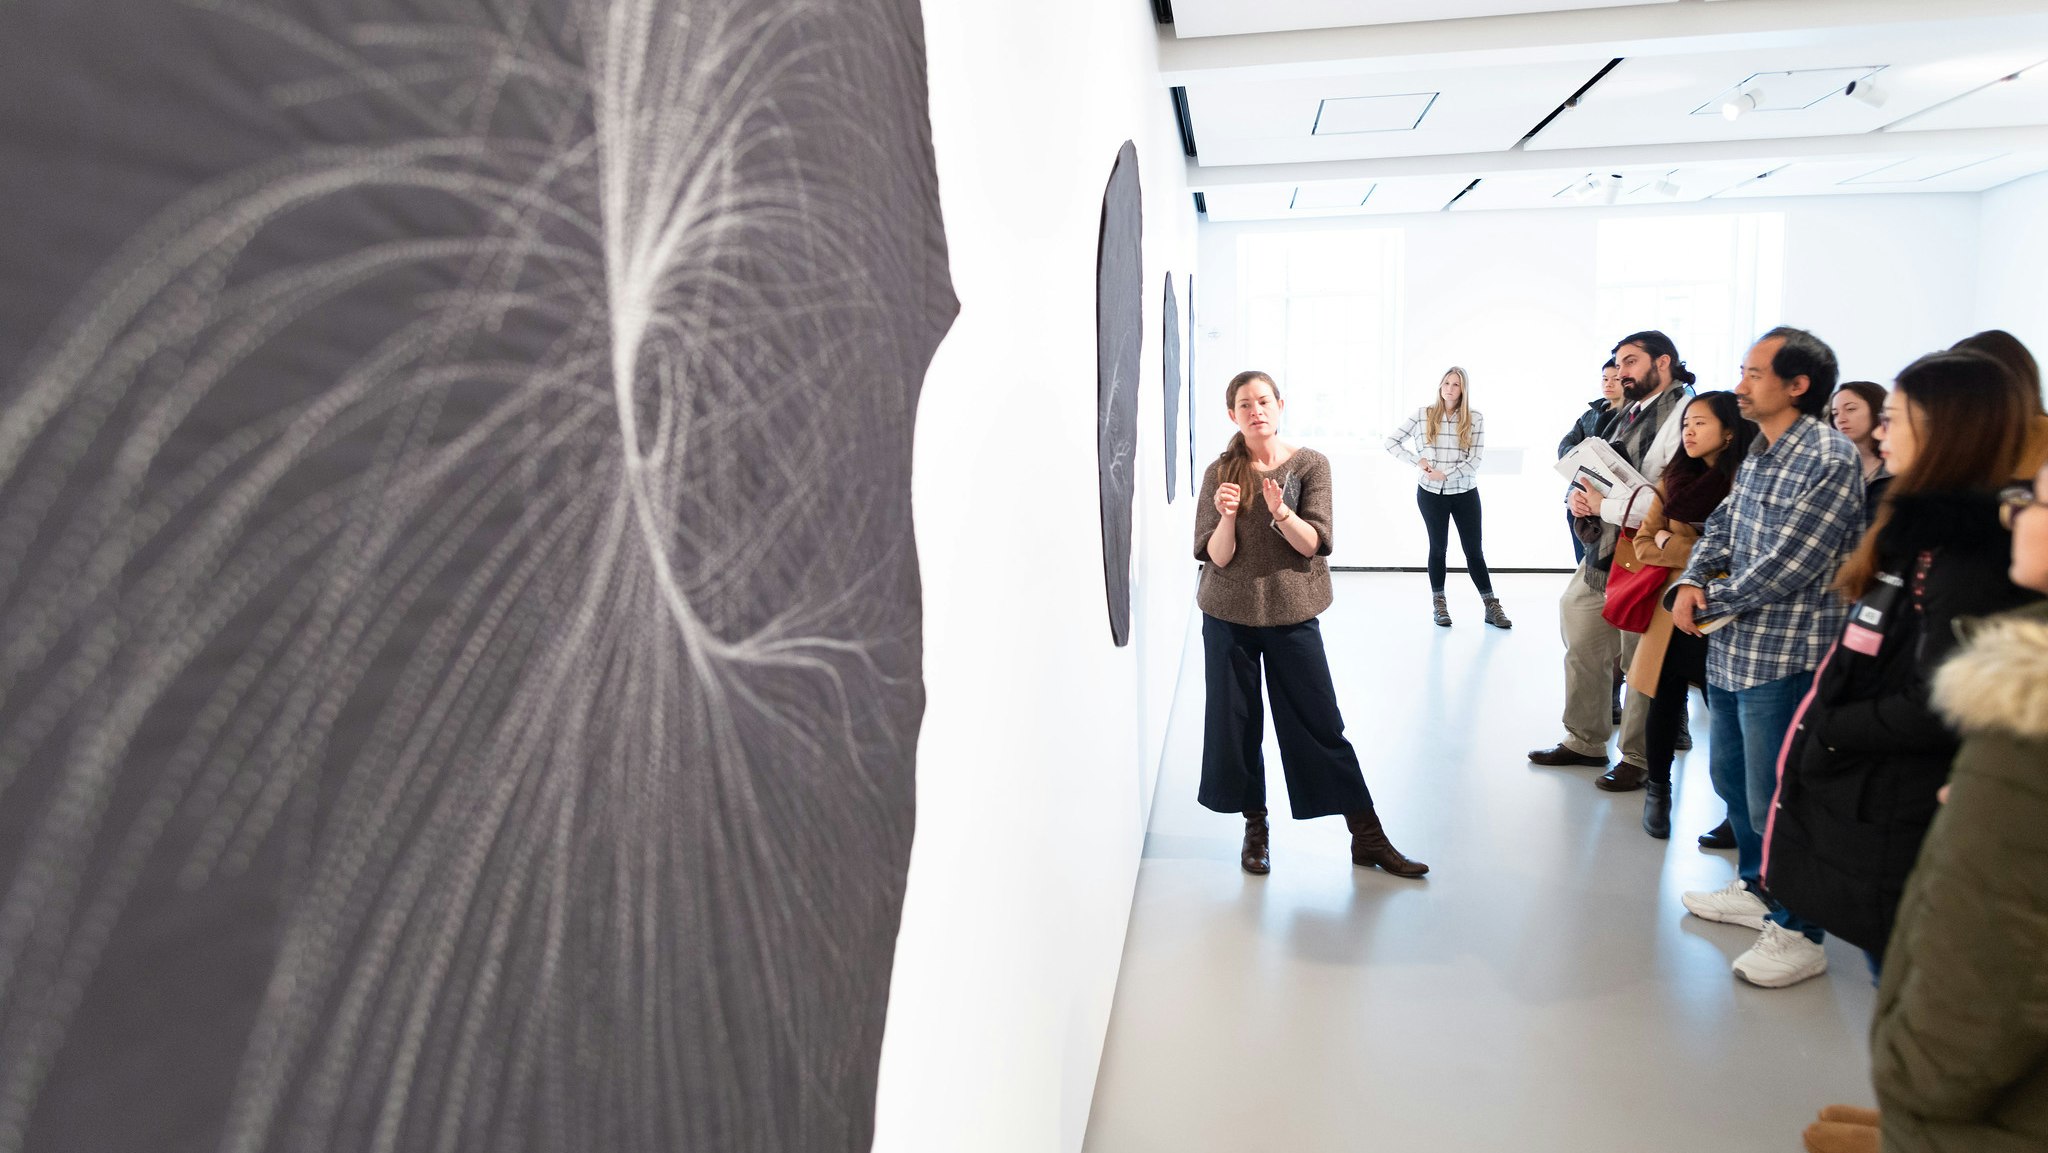 A group gathered admiring art at the 2018 Harvard Gallery Crawl.